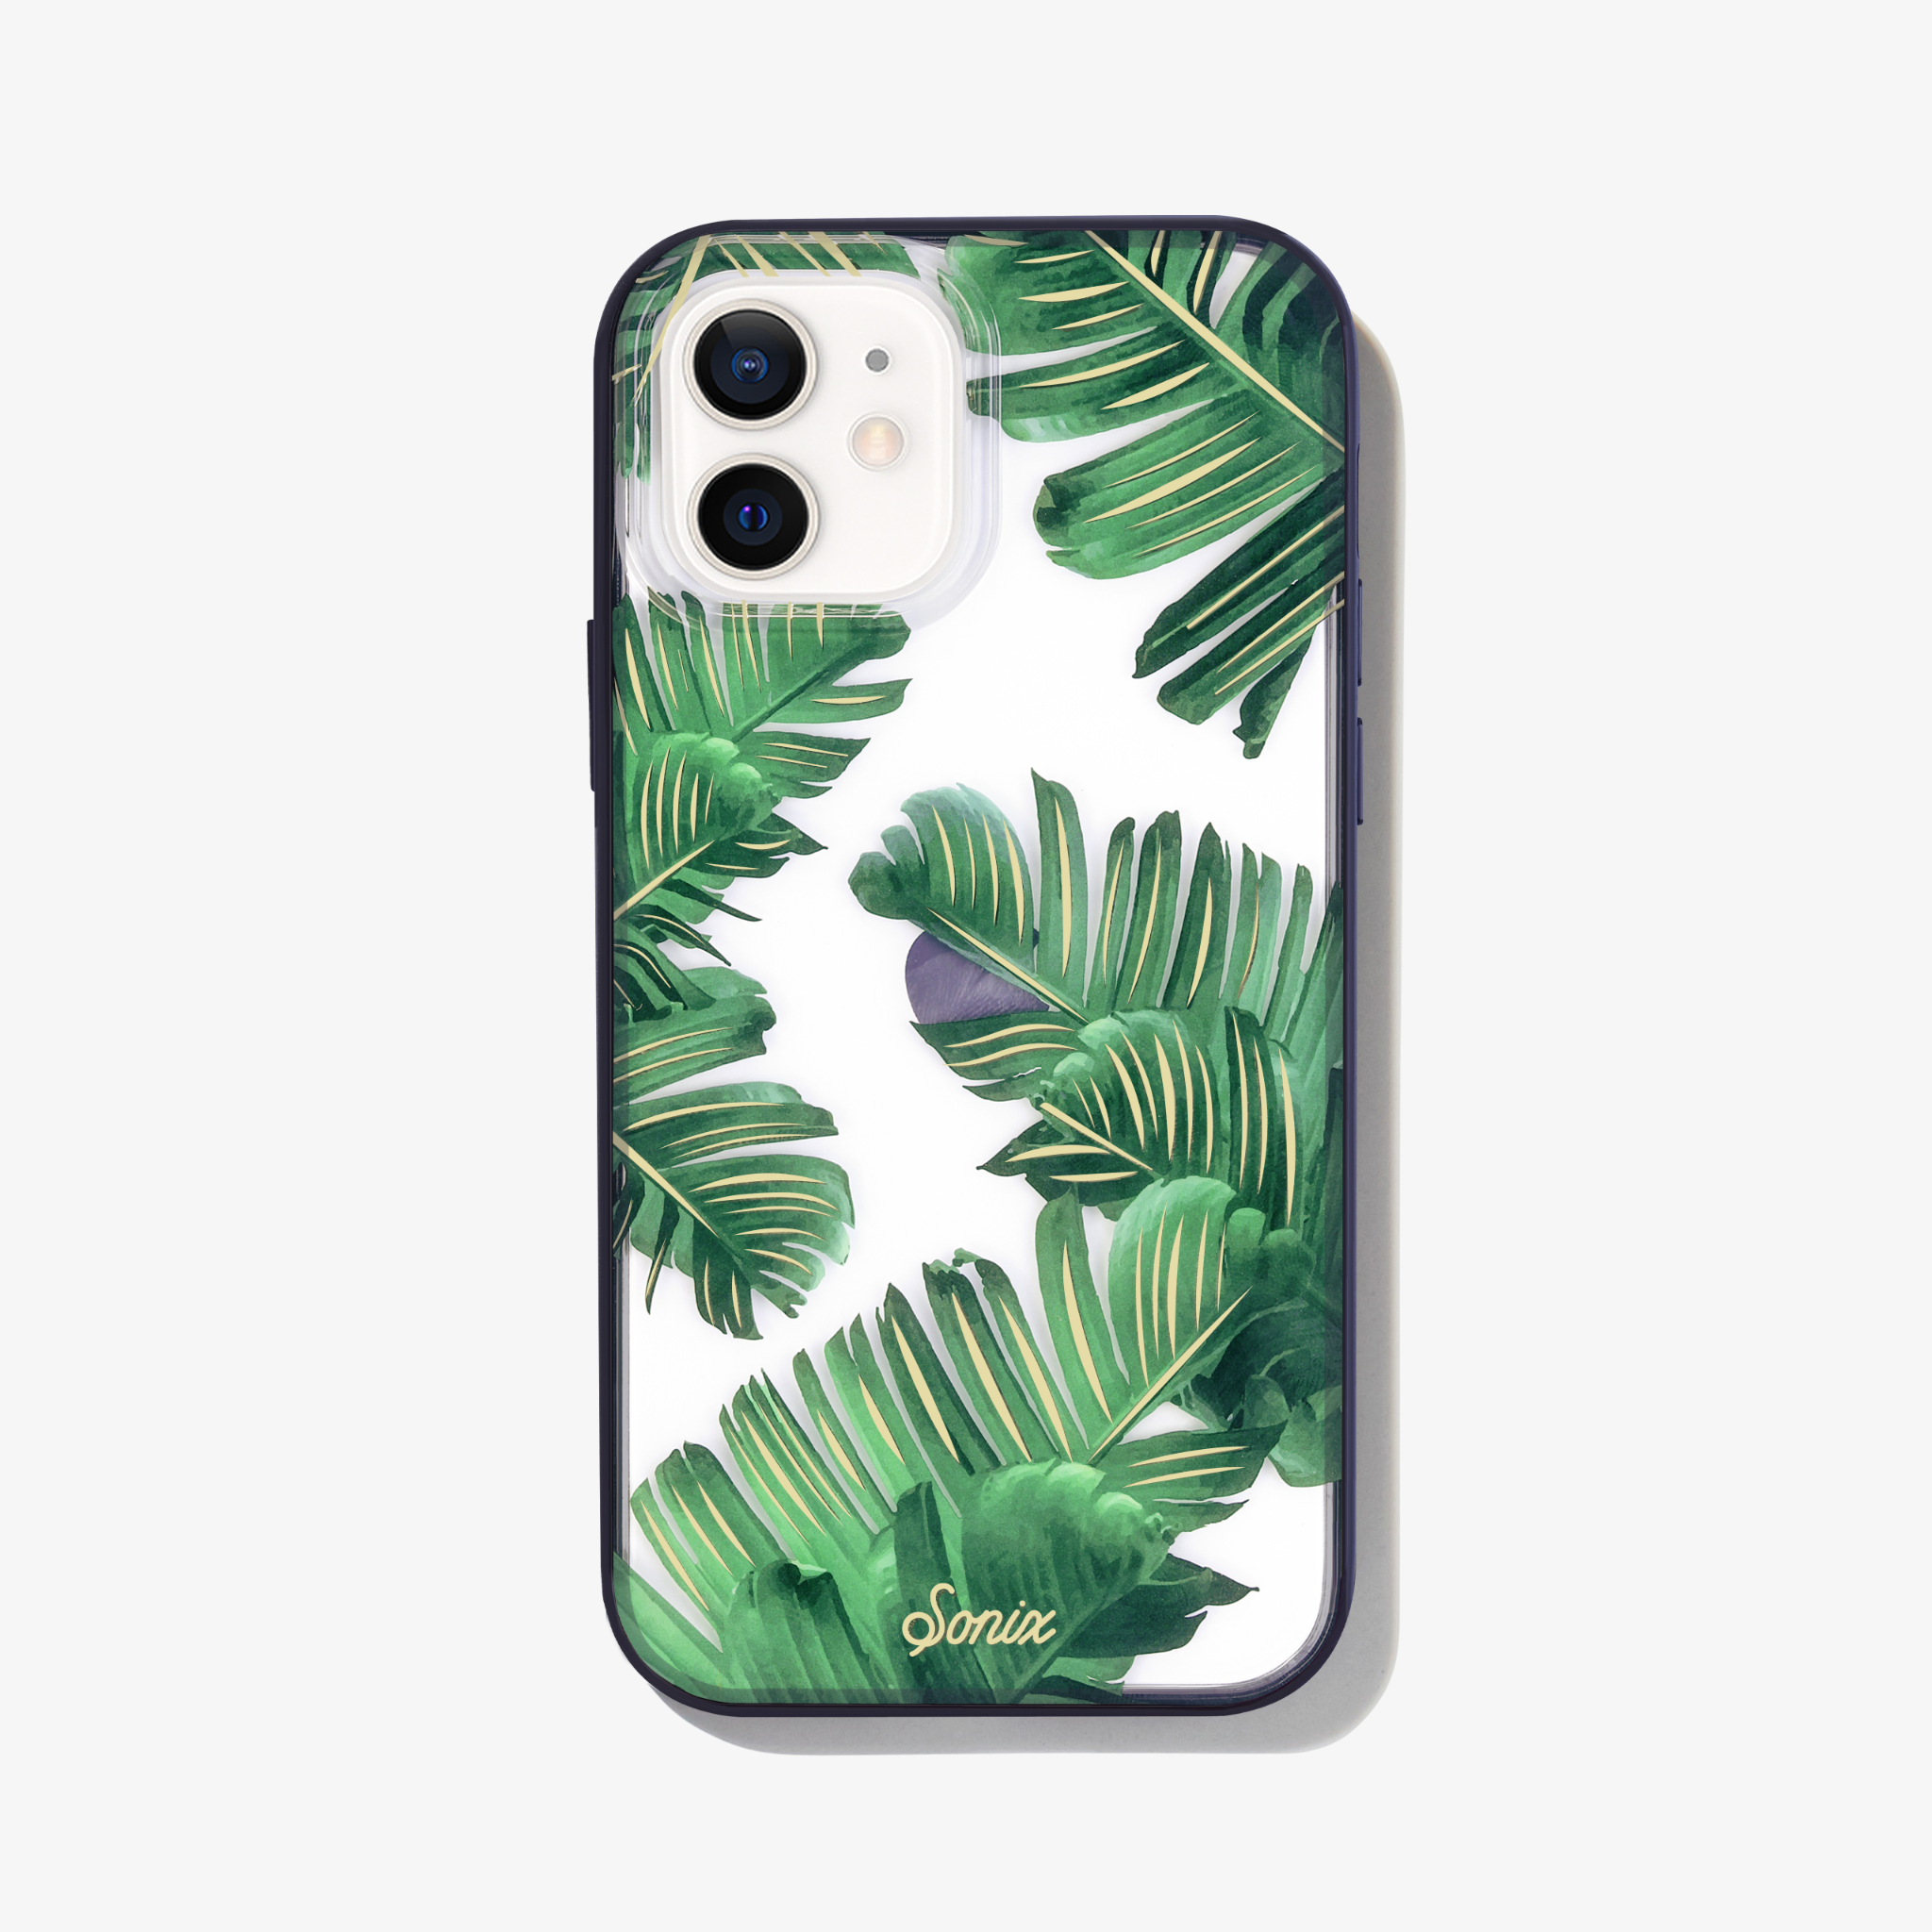 Bahama palm leaves iPhone 12 phone case on white phone.